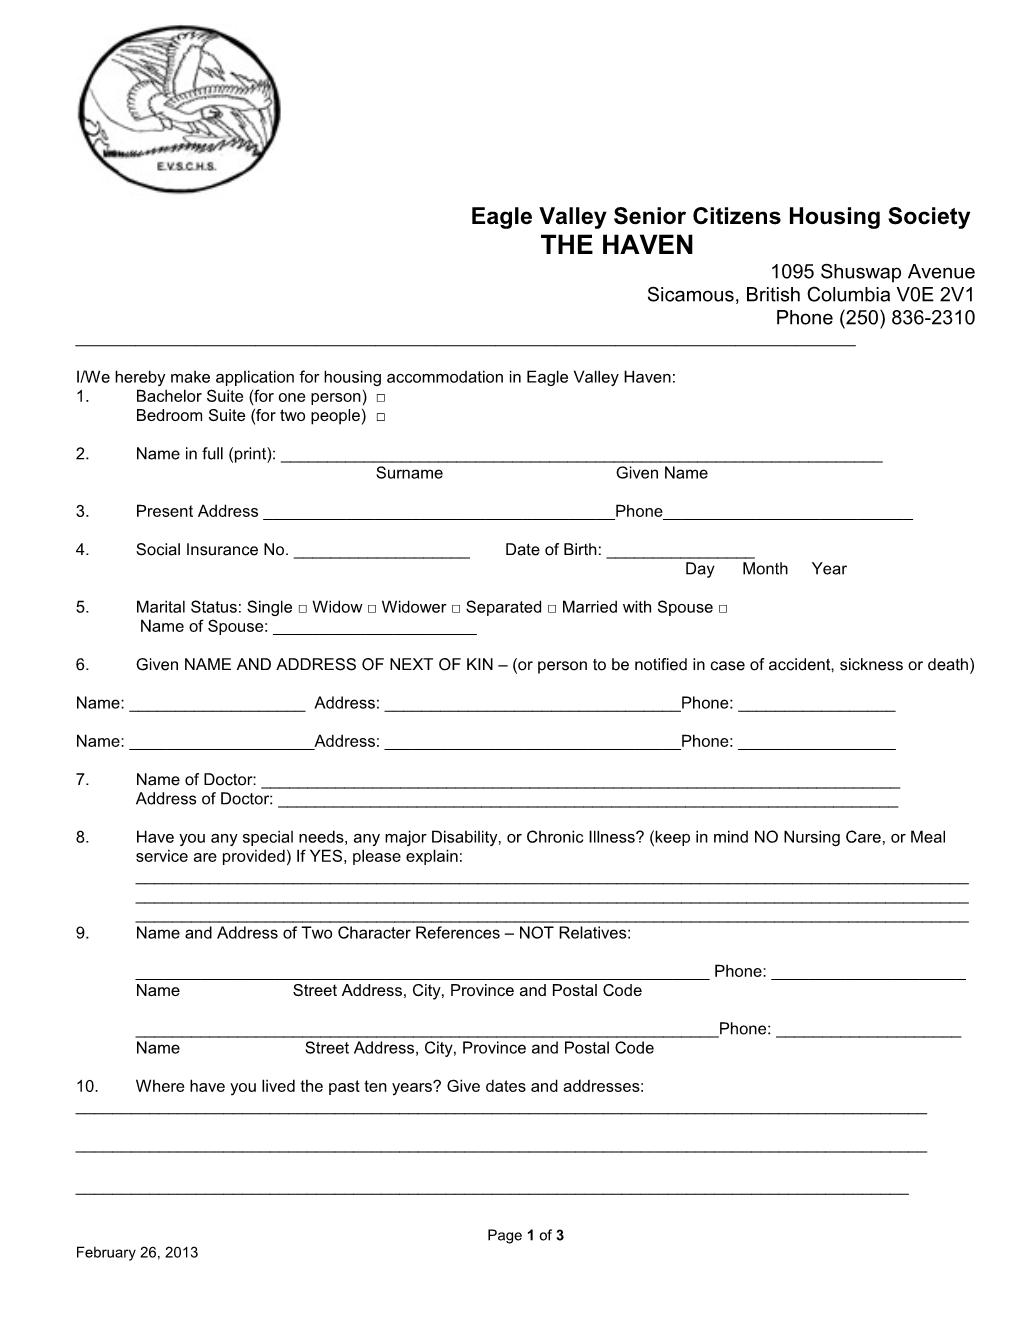 Eagle Valley Senior Citizens Housing Society